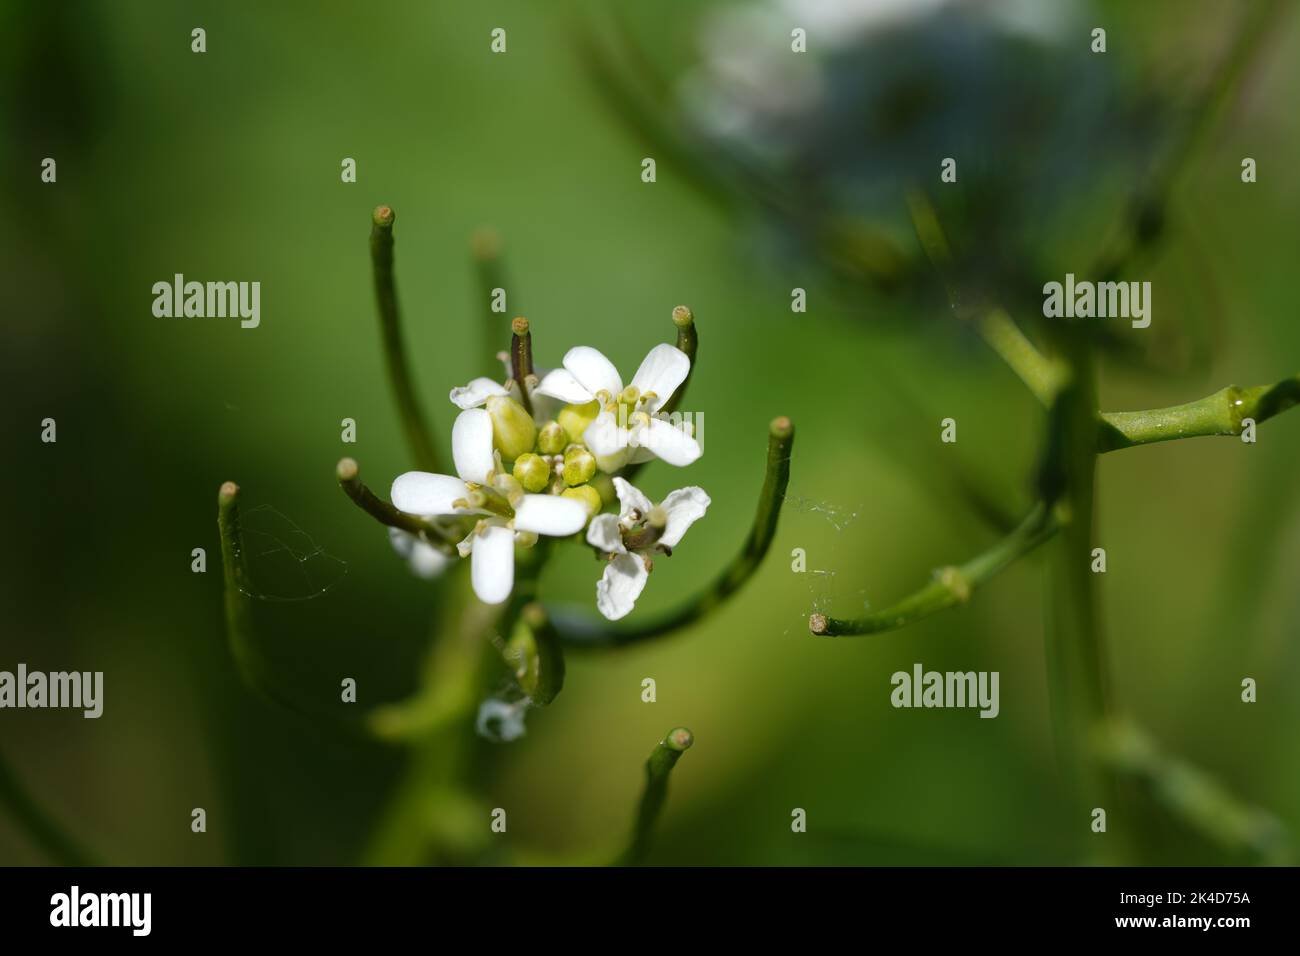 A macro shot of a Cardamine flexuosa flower shrub on a blurred background Stock Photo